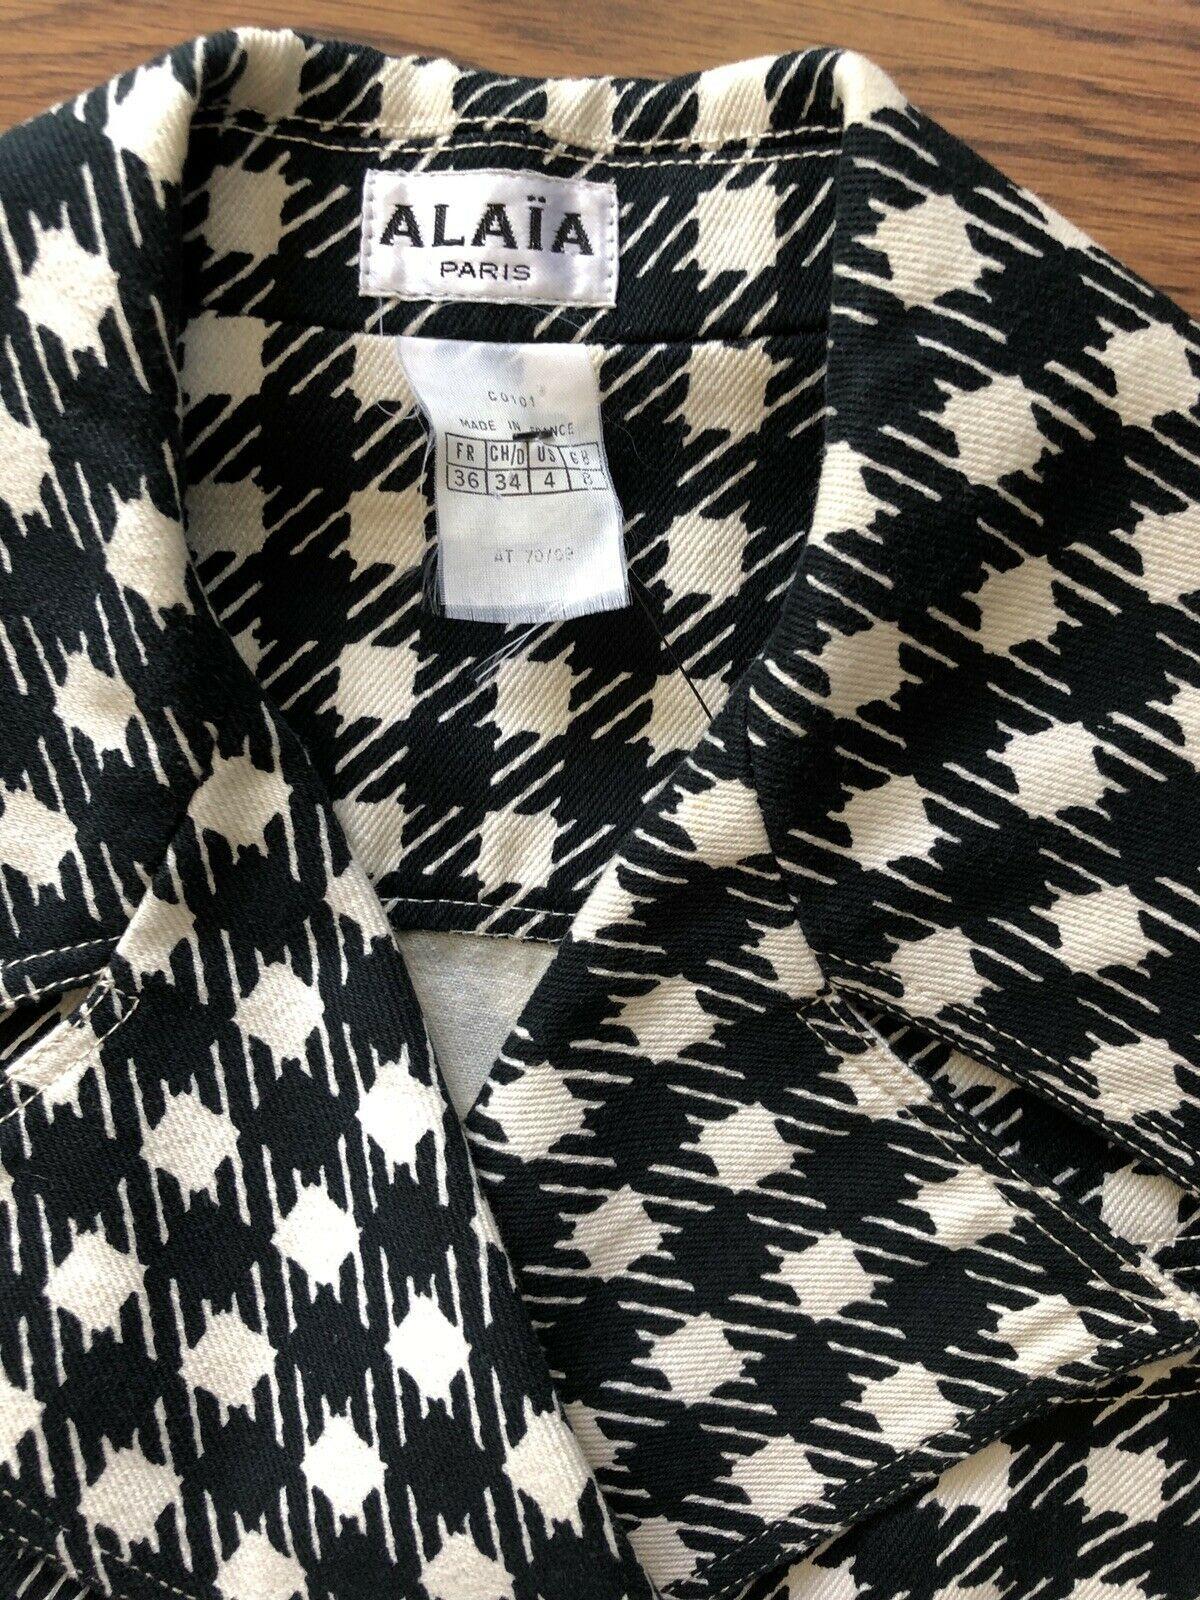 Women's Azzedine Alaia S/S 1991 Iconic Tati Checkered Black and White Crop Jacket